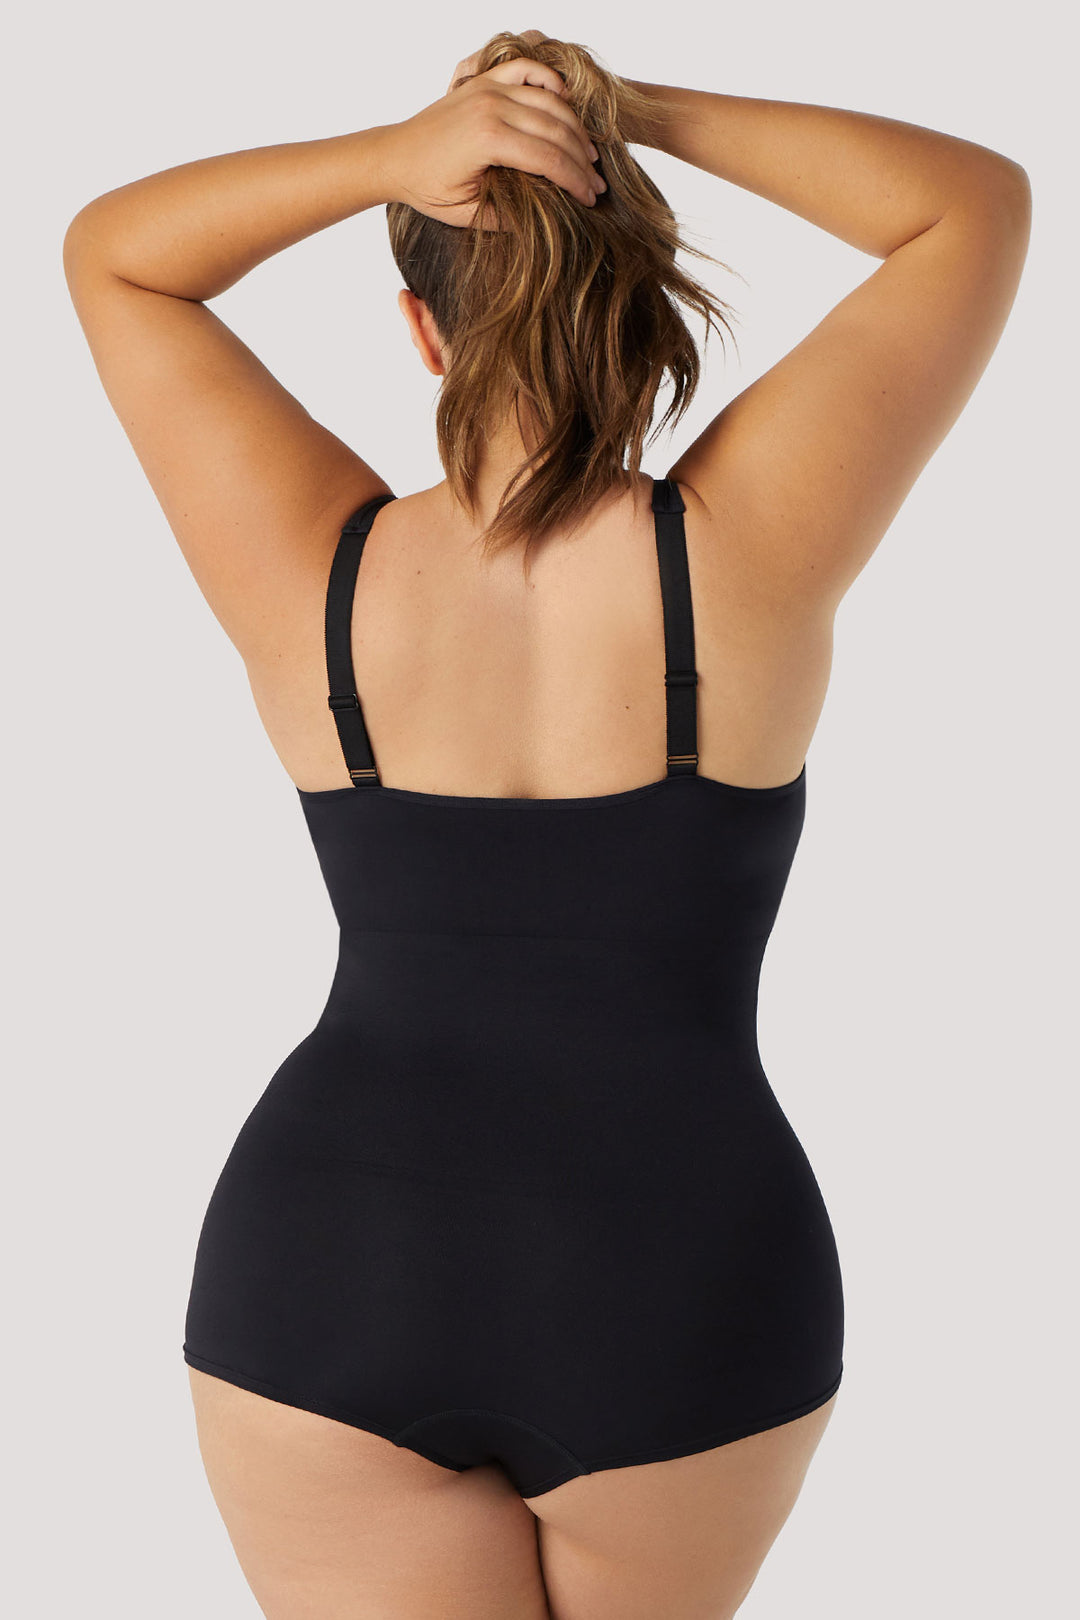 Seamless Tight-Fitting Bumpy Silhouette Flexible Plus Size Full Body Shaper